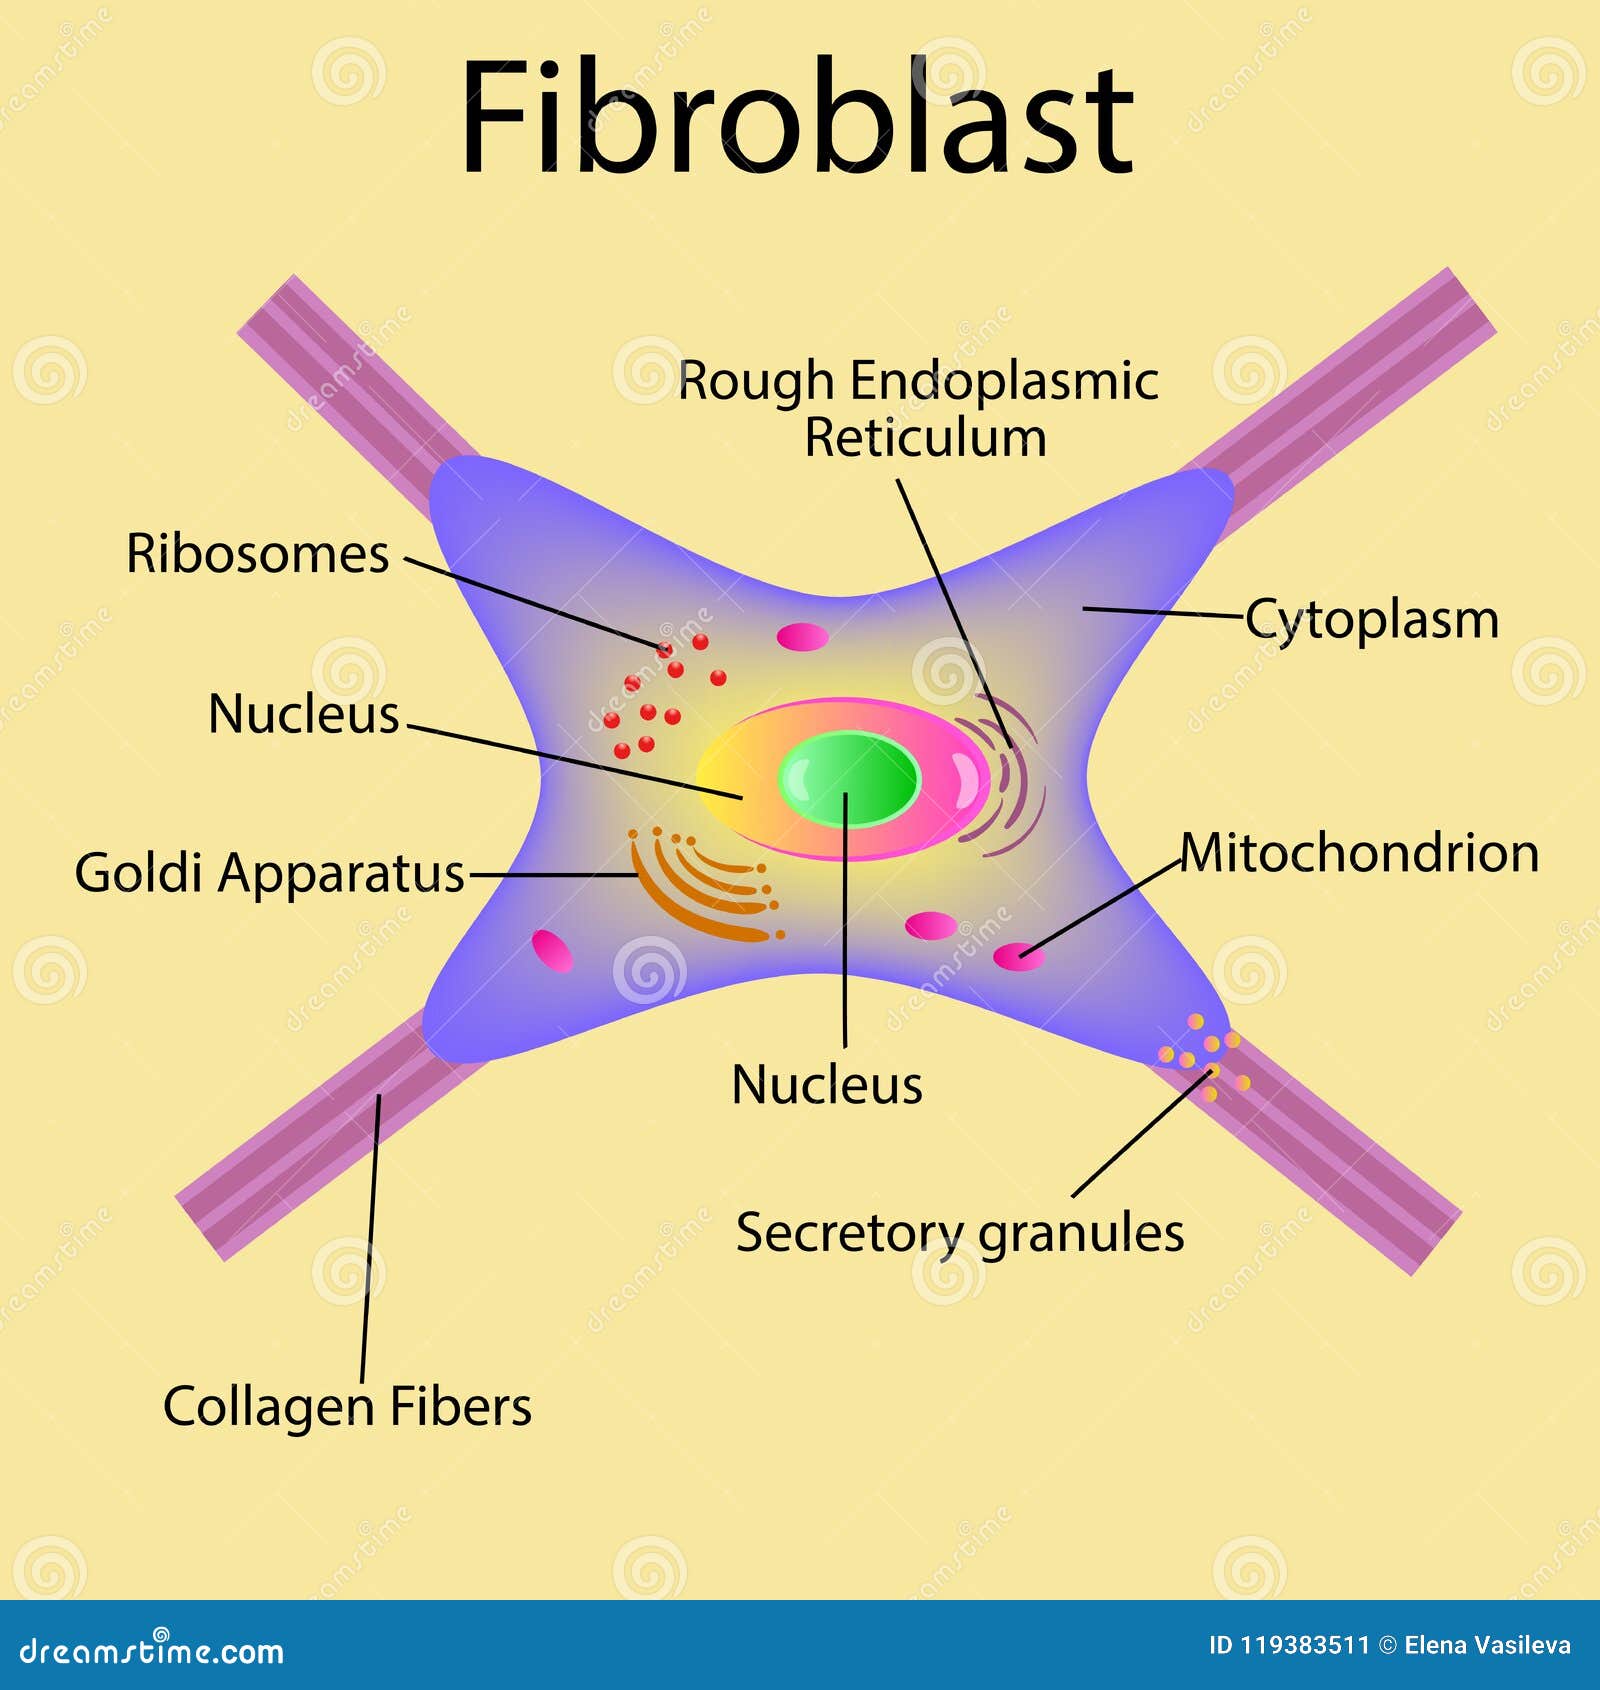 fibroblast is a dermis cell. structure of fibroblast cell.